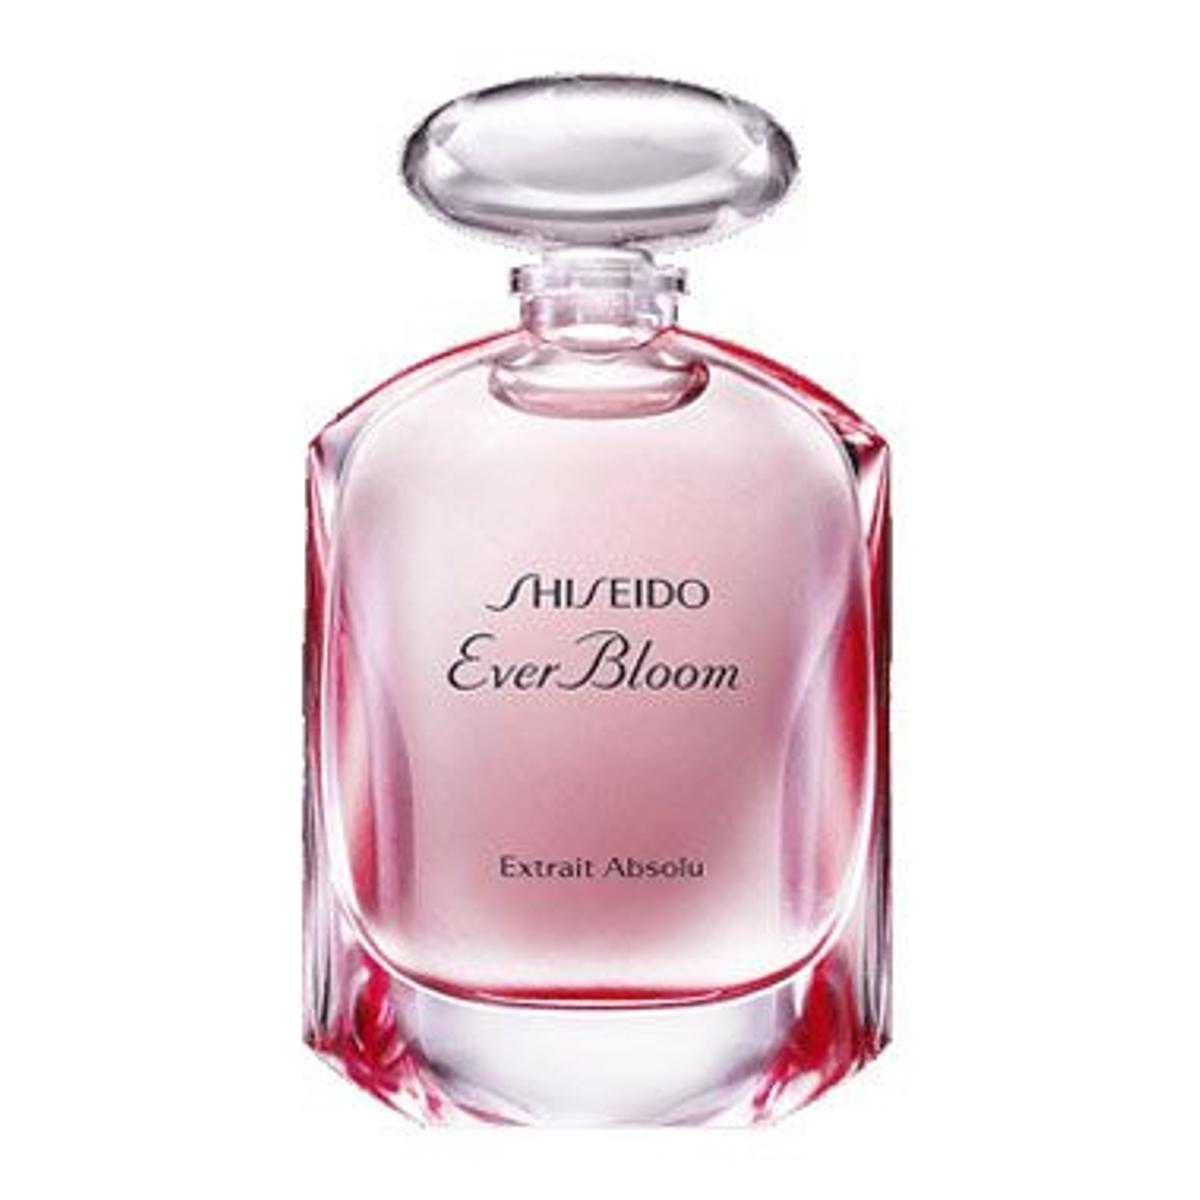 Ever Bloom, Shiseido